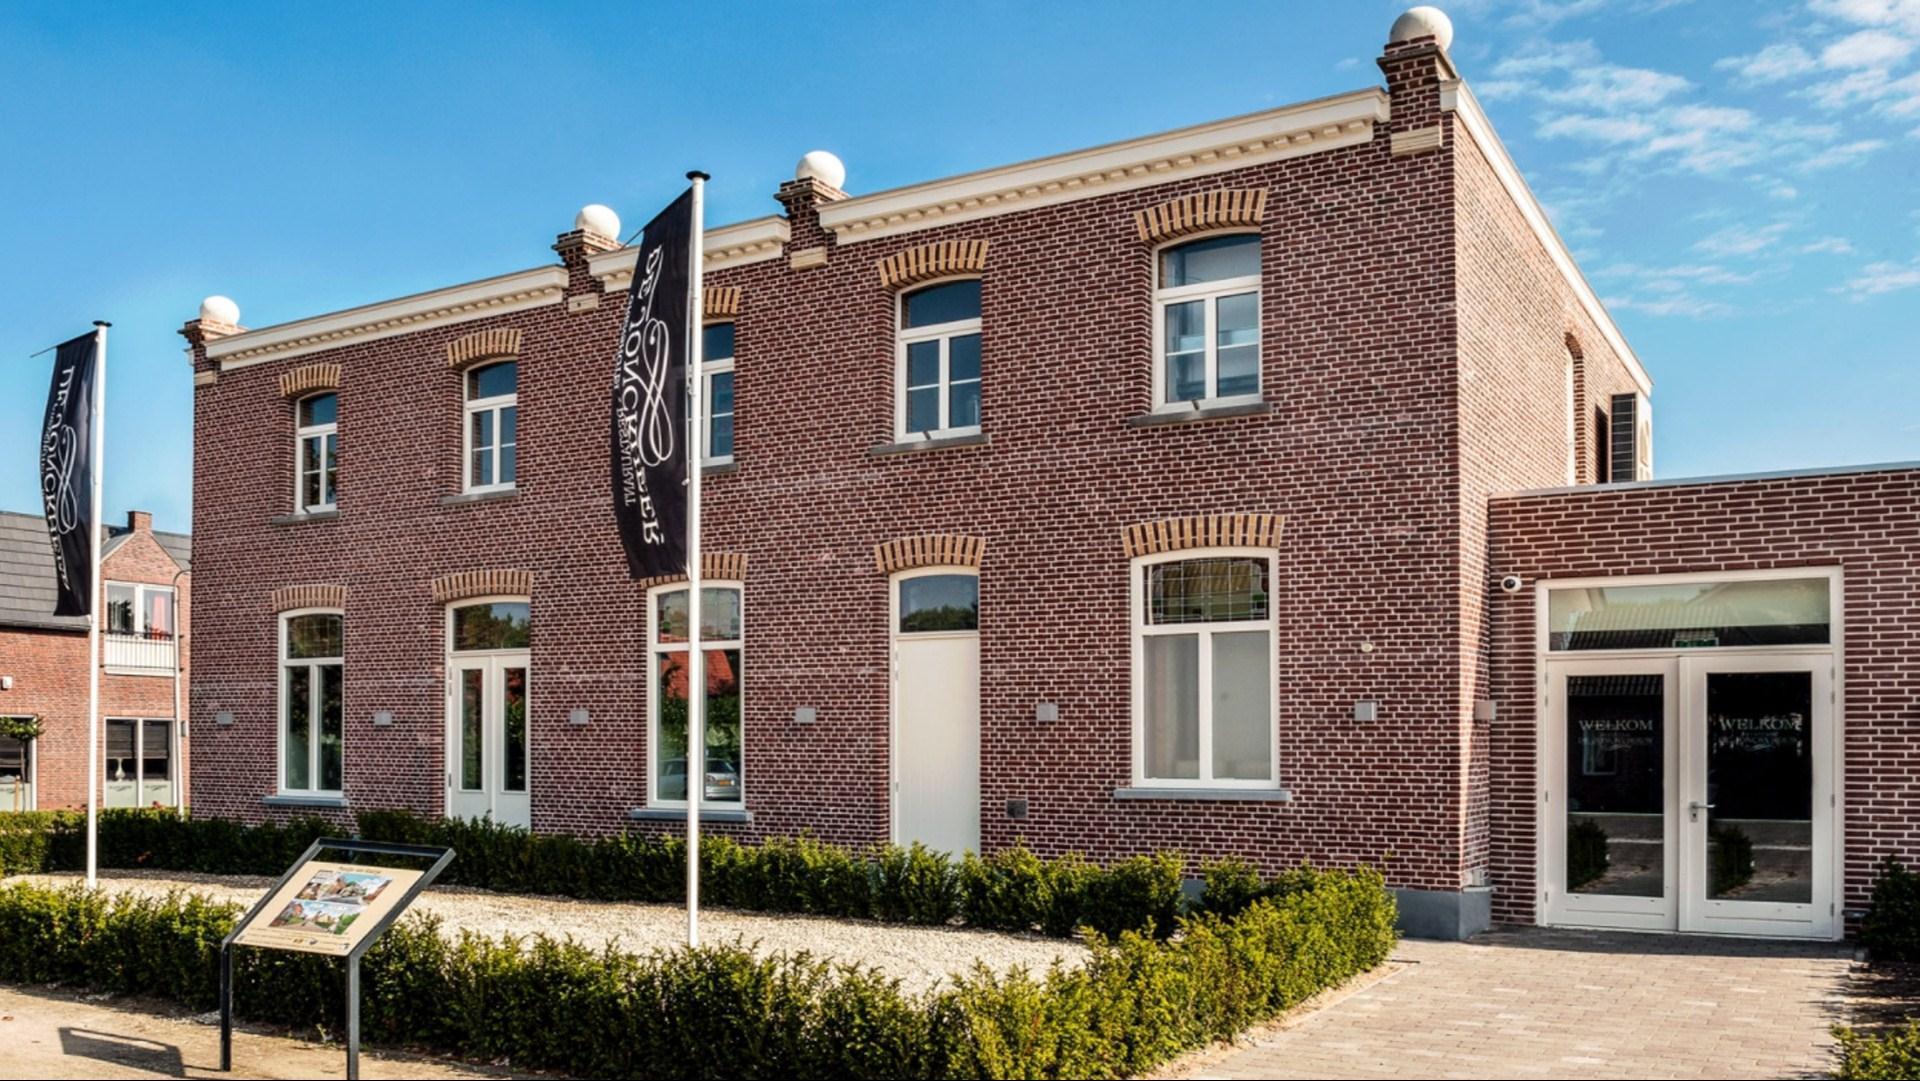 Grenshotel de Jonckheer in Ossendrecht, NL